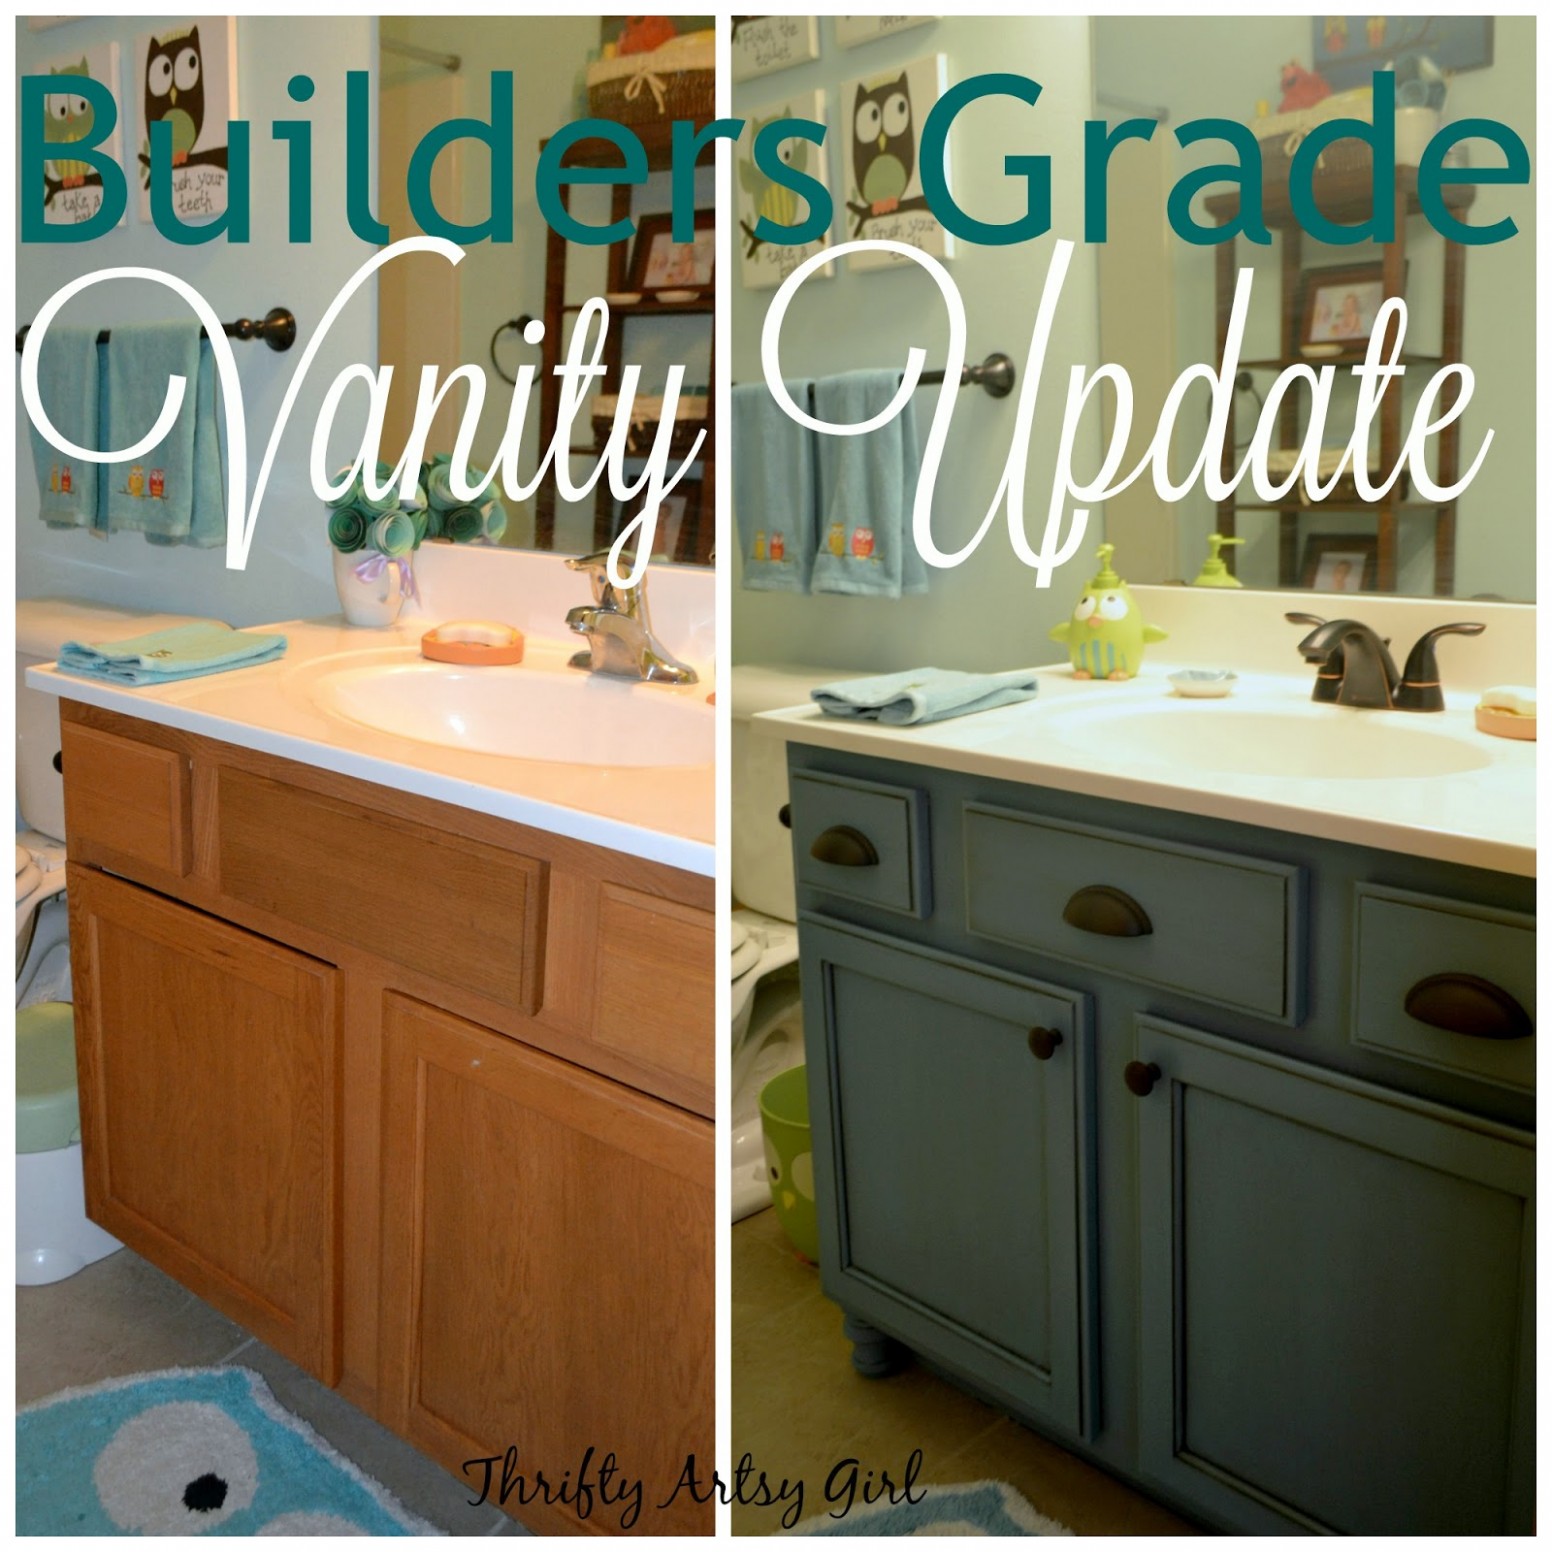 Thrifty Artsy Girl: Builders Grade Teal Bathroom Vanity And Faucet ..